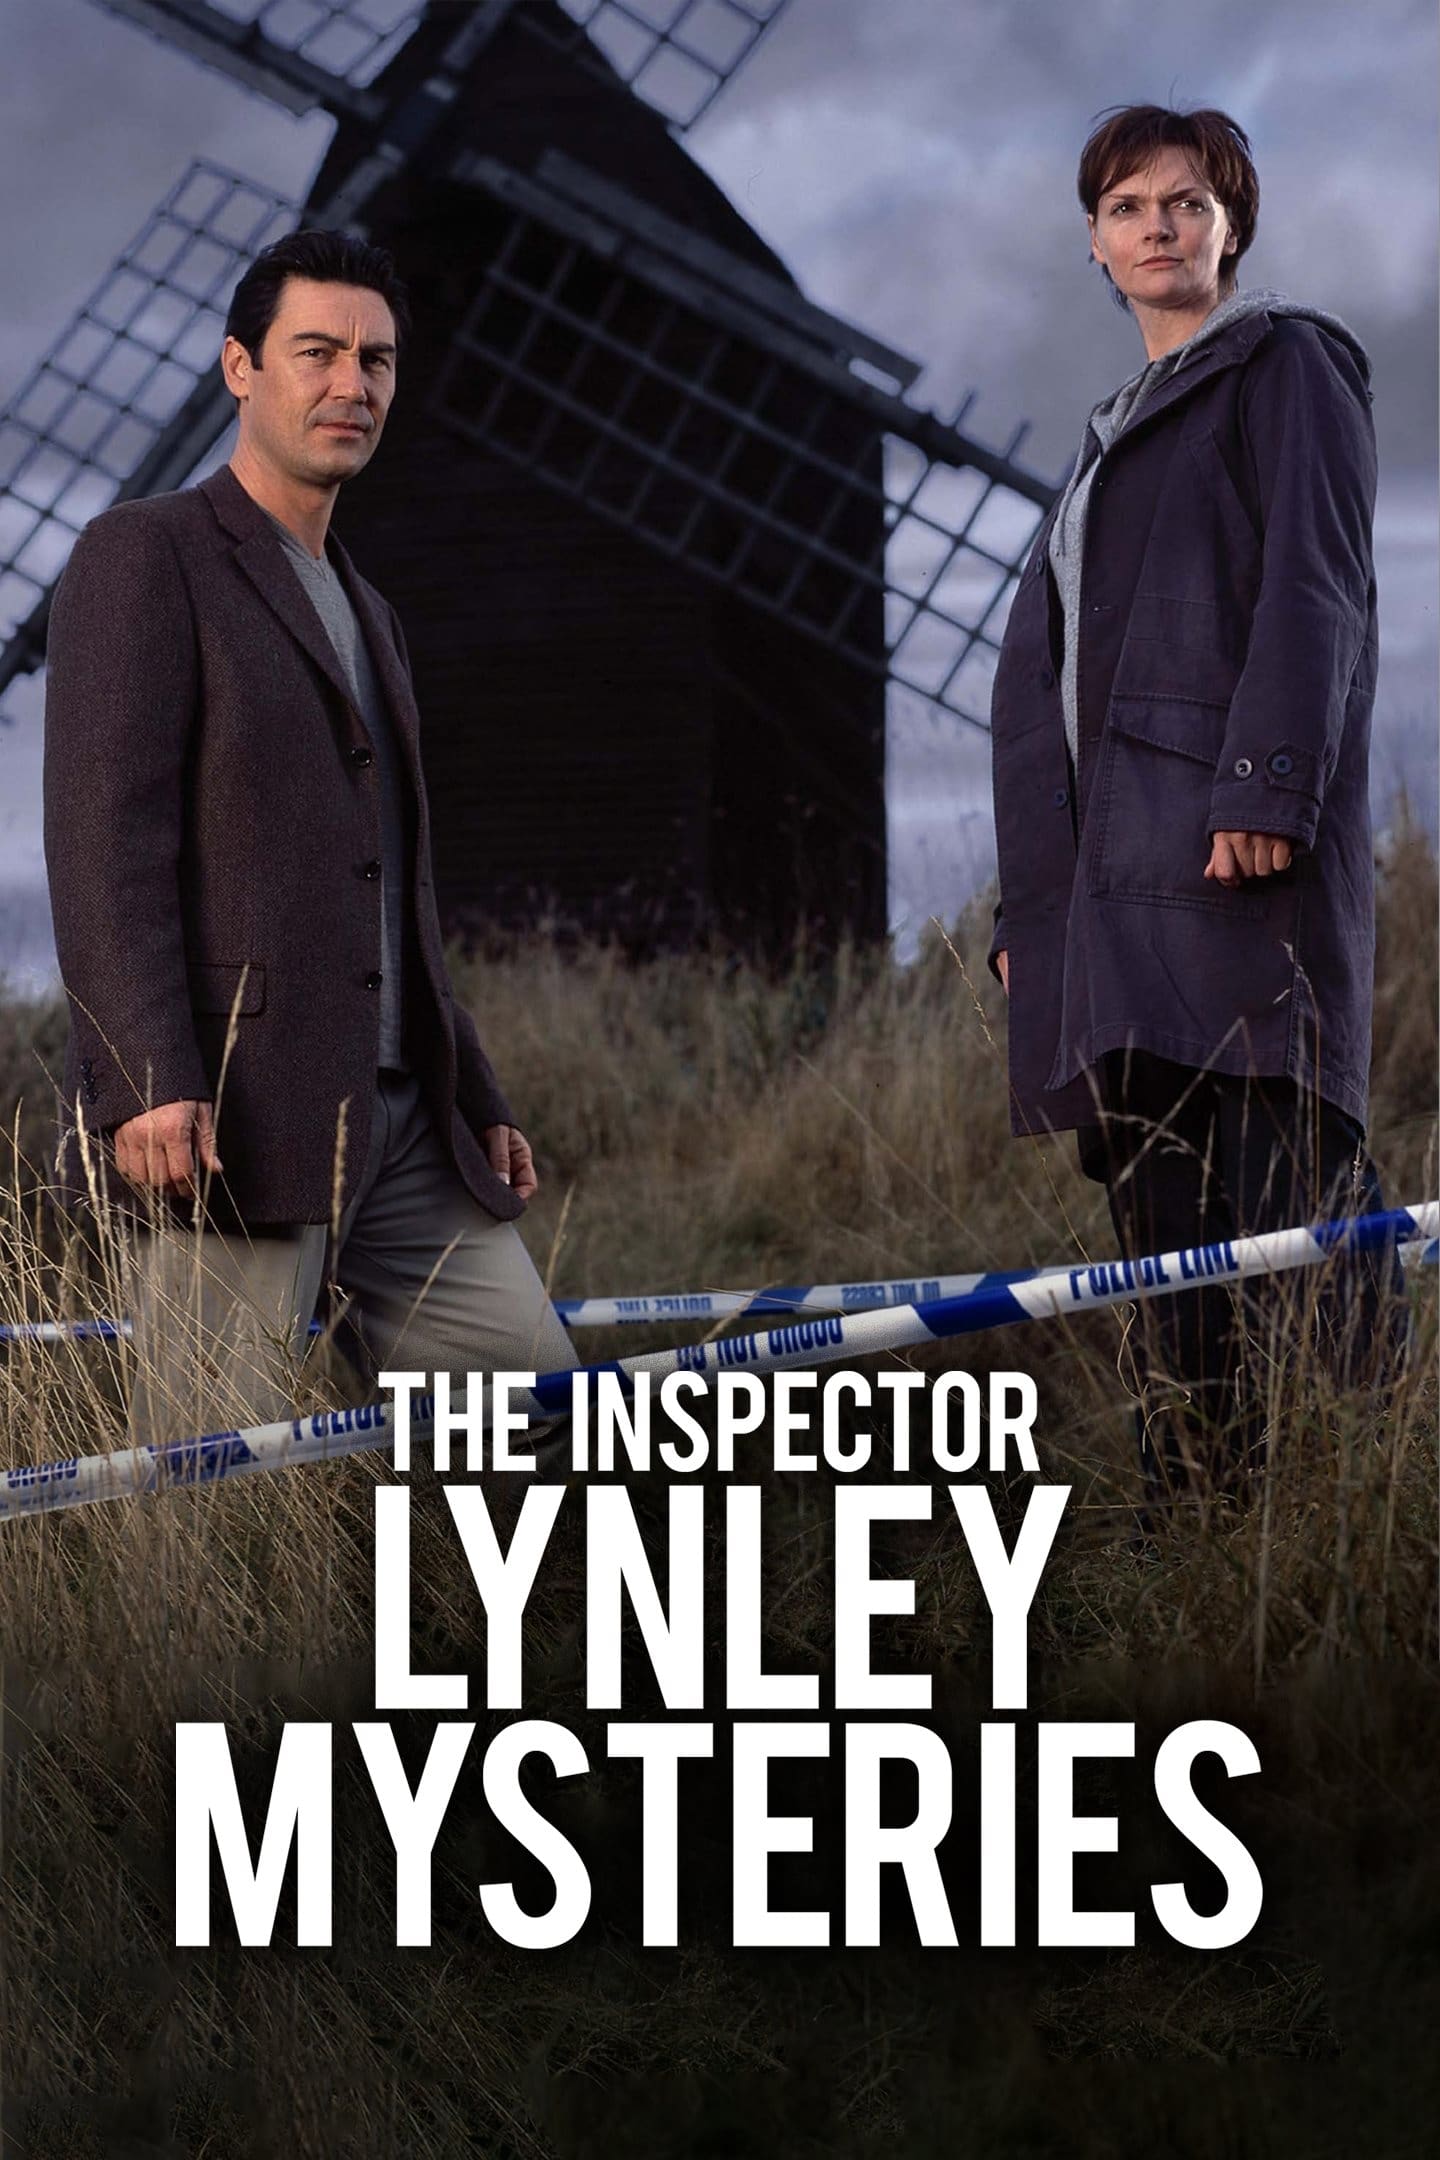 The Inspector Lynley Mysteries (2001-2007)